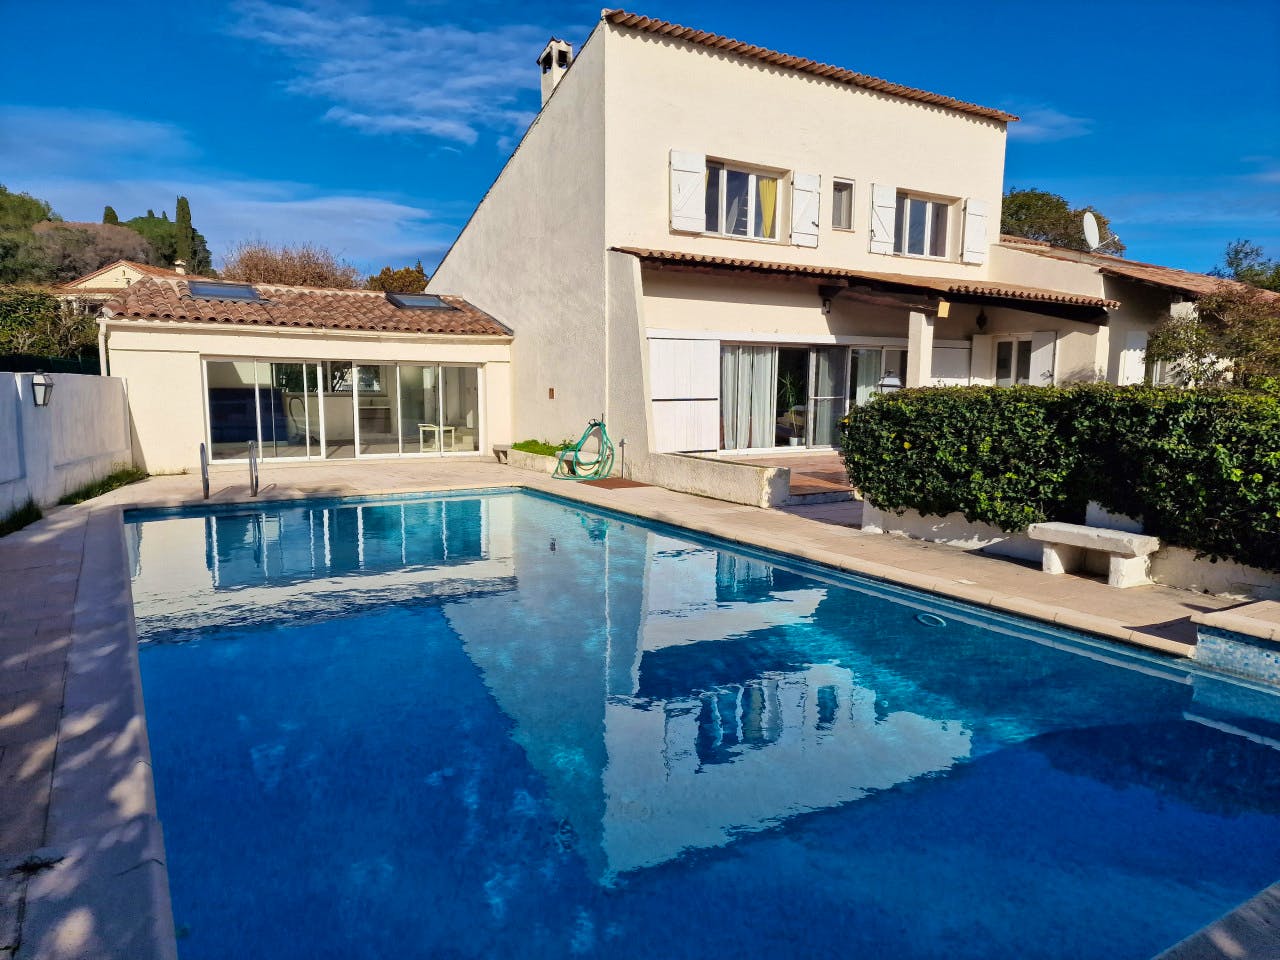 Stunning villa 15 minutes from Nice Côte d'Azur Airport